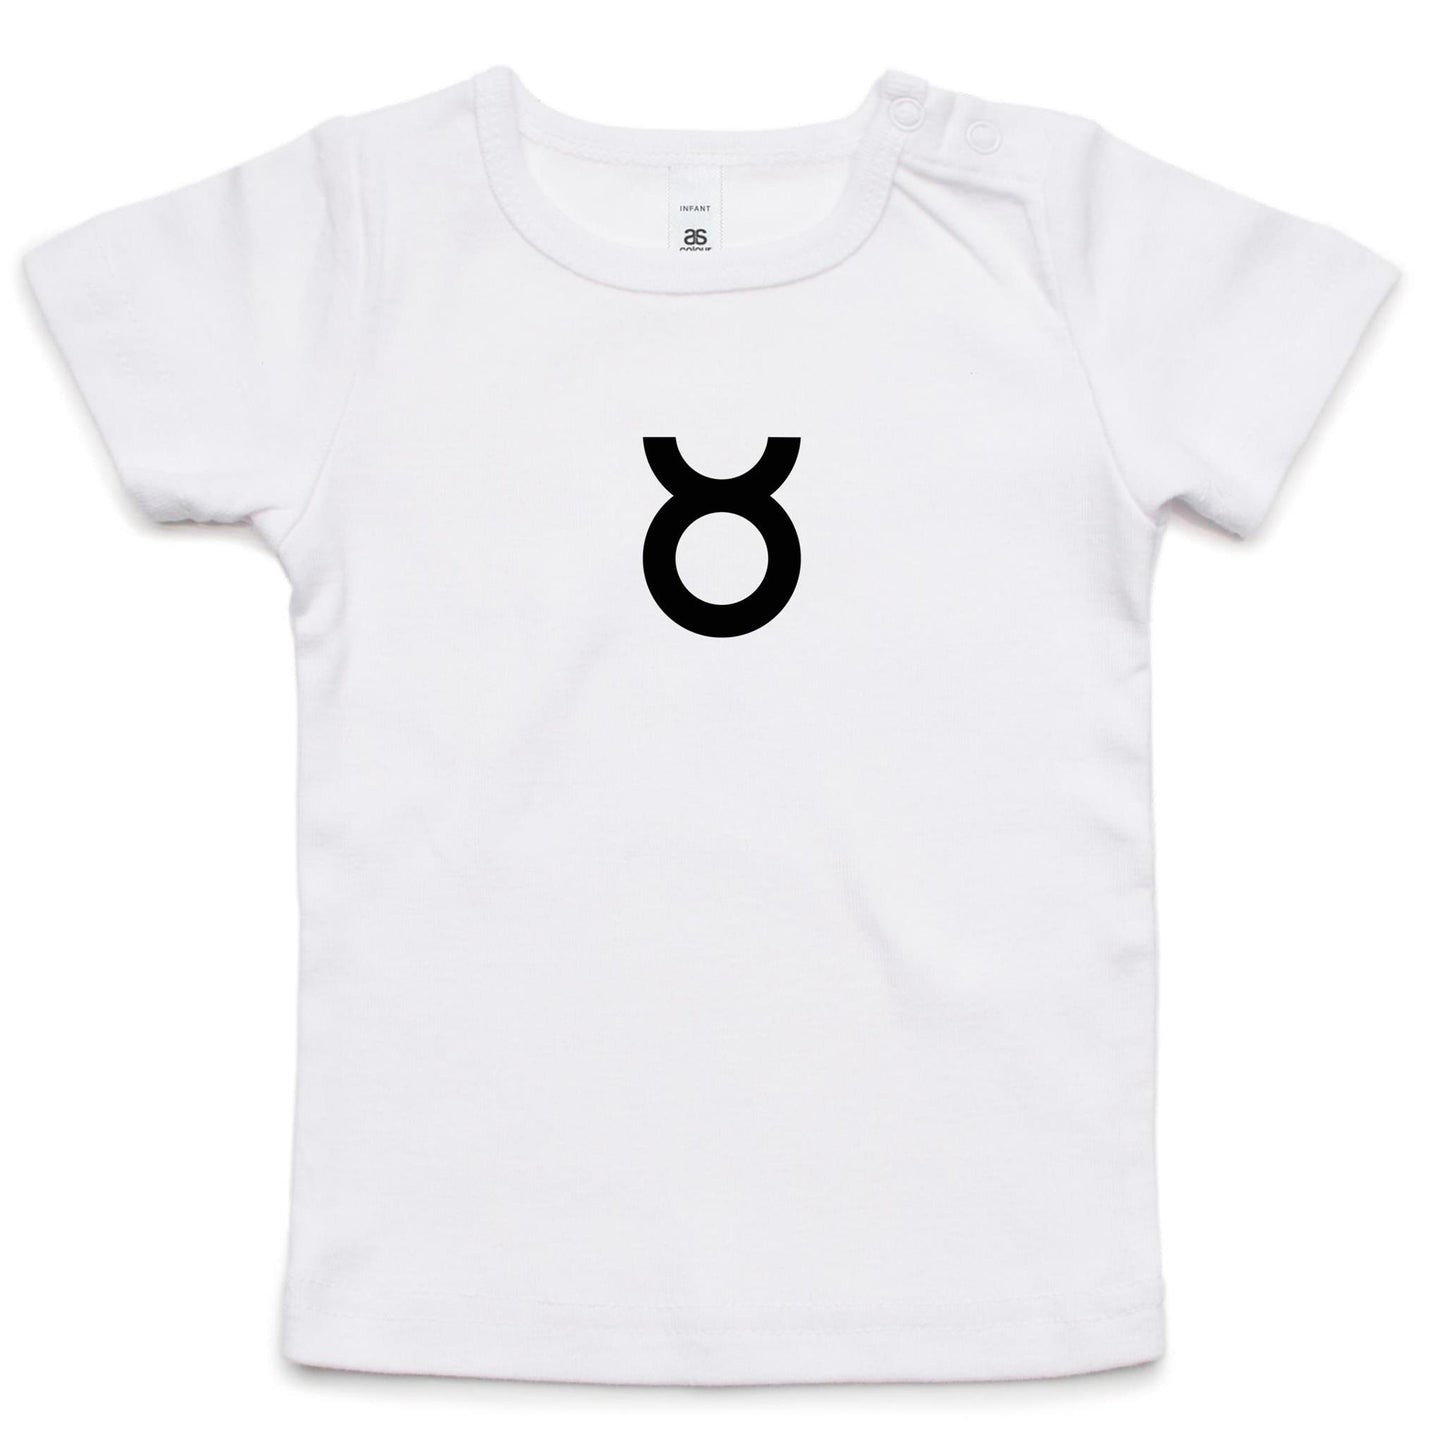 Taurus T Shirts for Babies